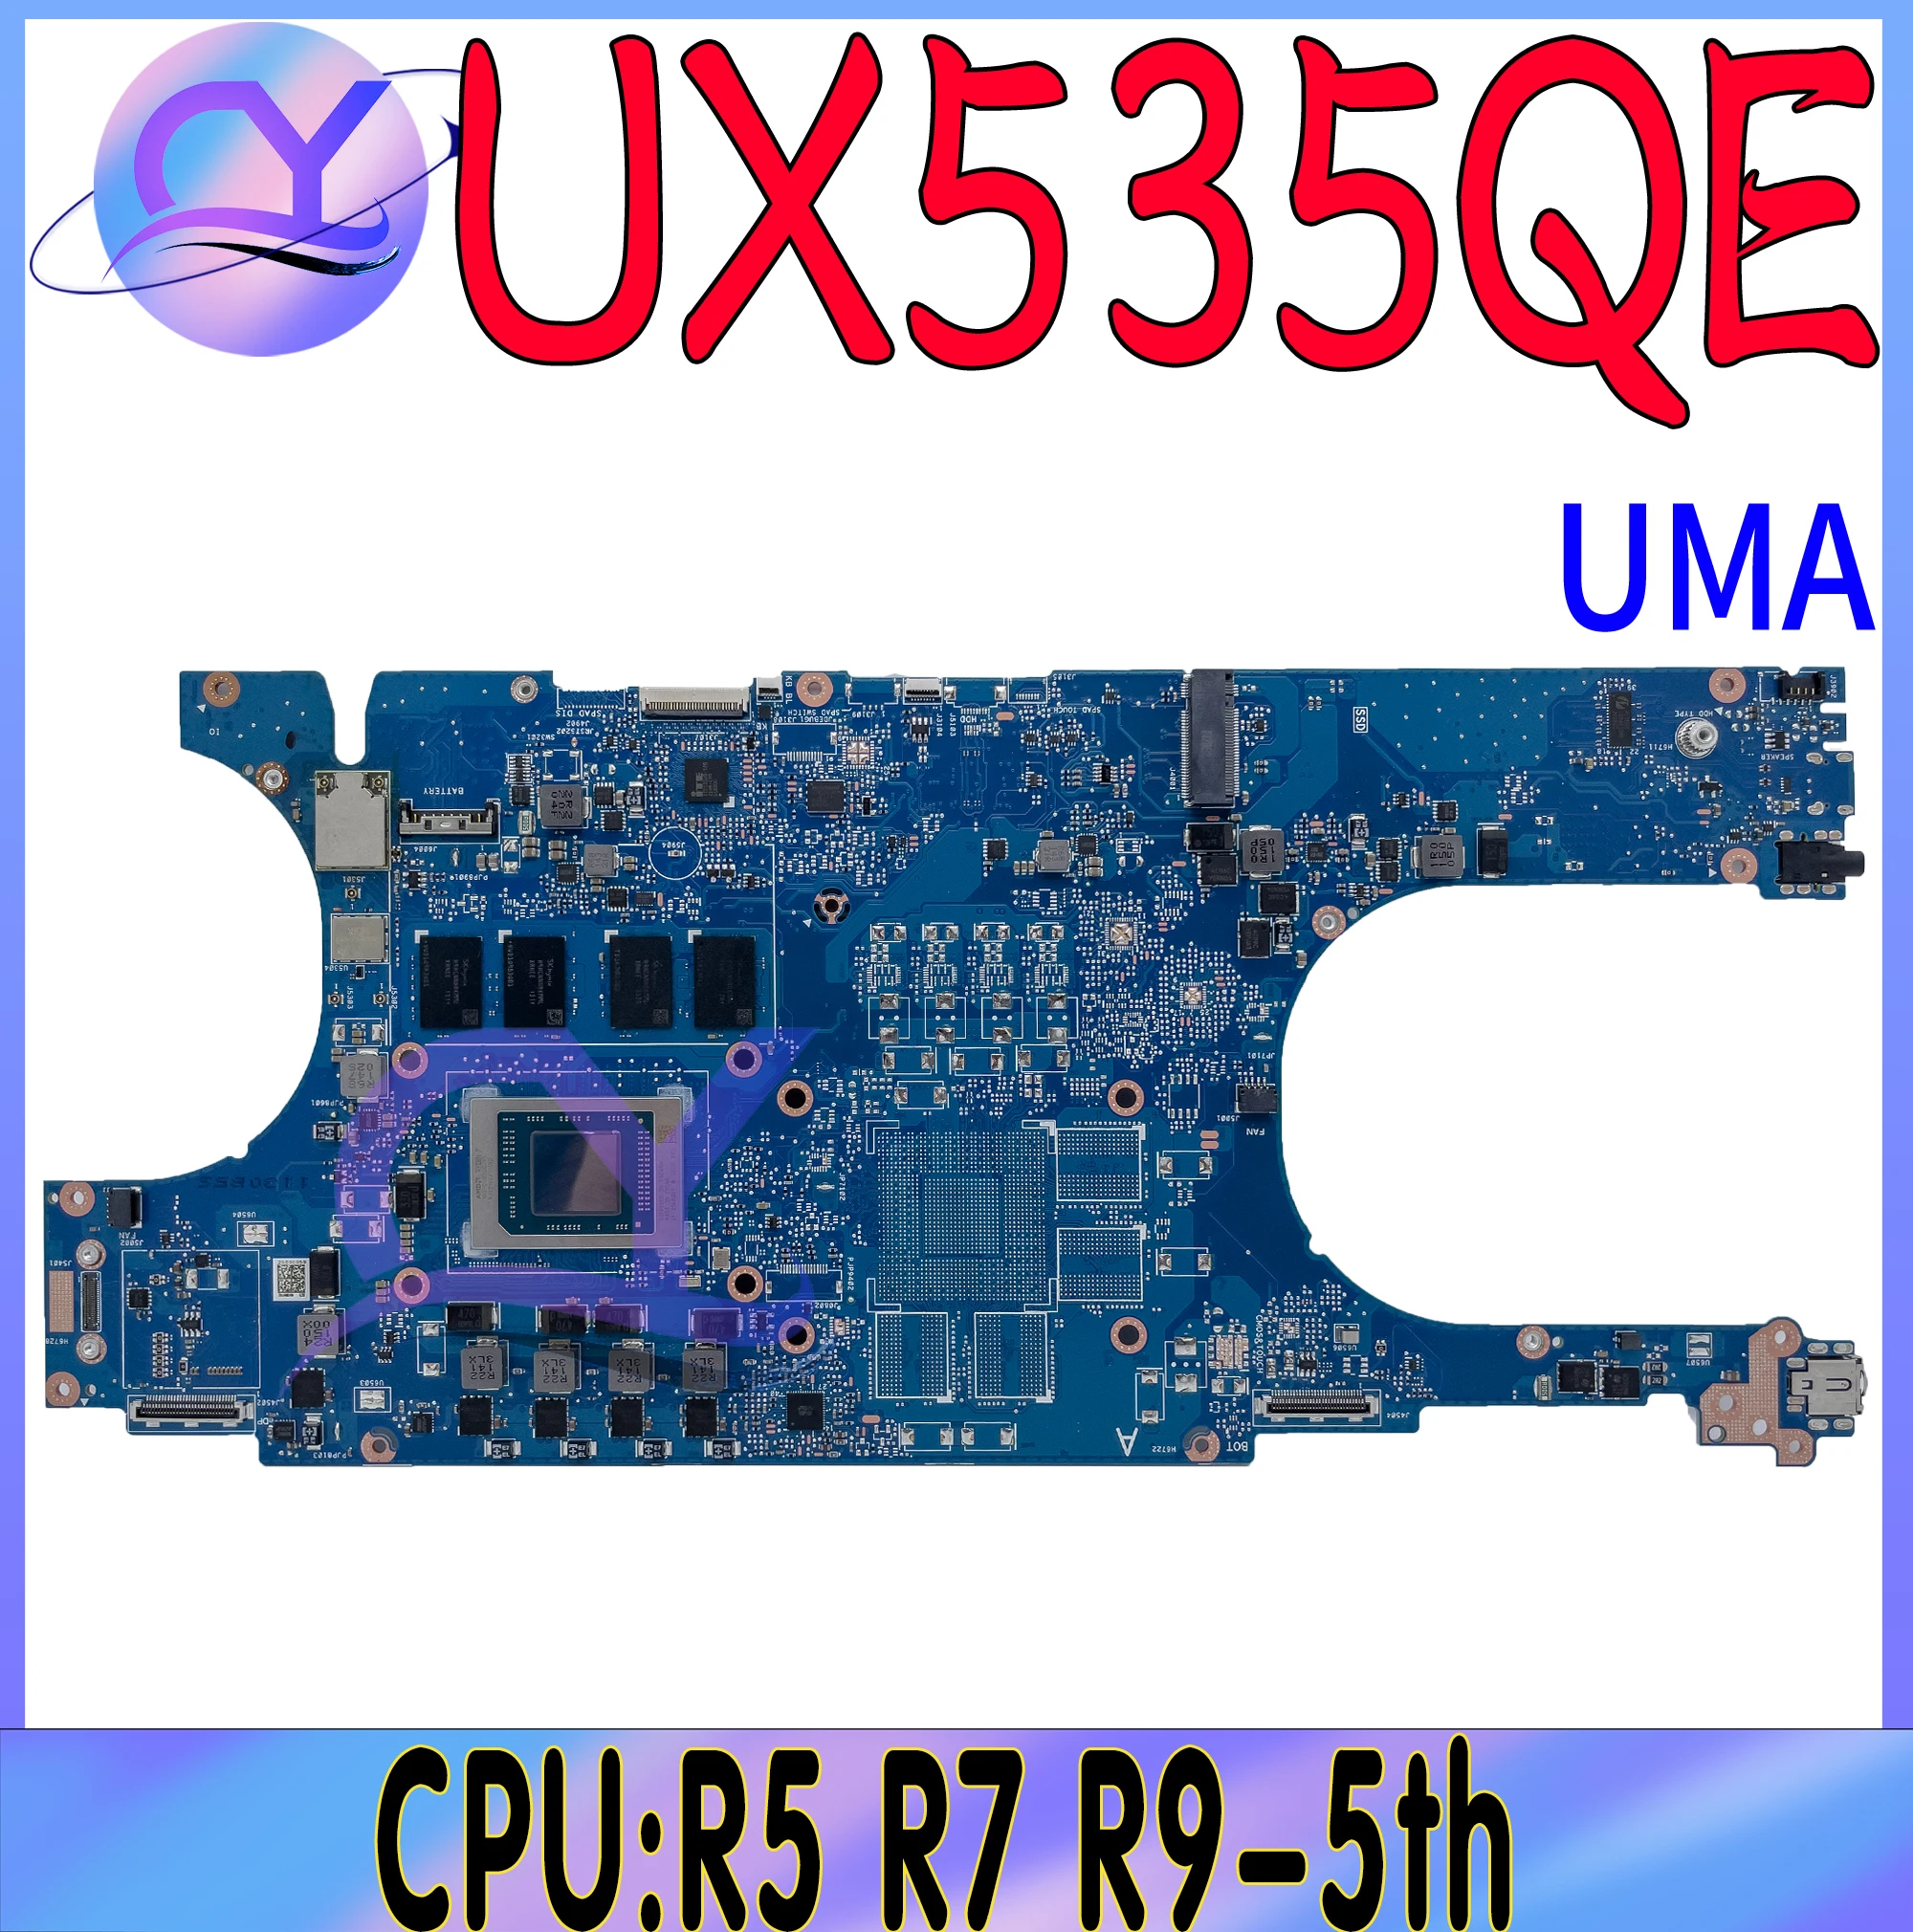 

UX535QE Mainboard For ASUS UX535Q UX535QA BM535QE UM535QE UM535 UM535QE BM535Q Laptop Motherboard R5 R7 R9-5th 8GB-RAM 100% Test